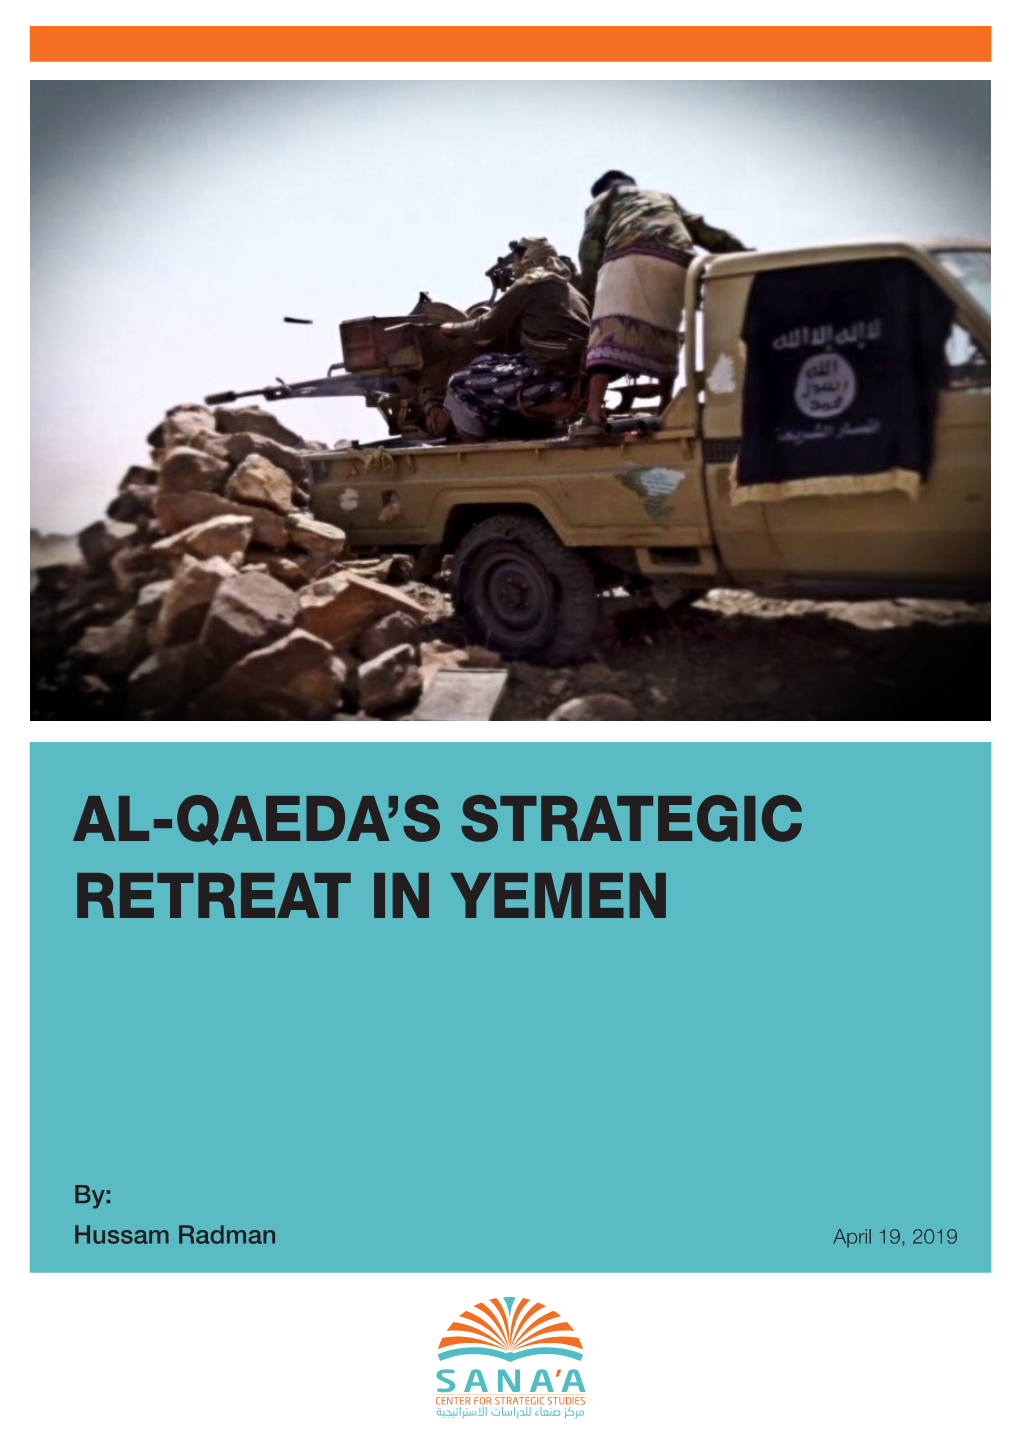 Al-Qaeda's Strategic Retreat in Yemen